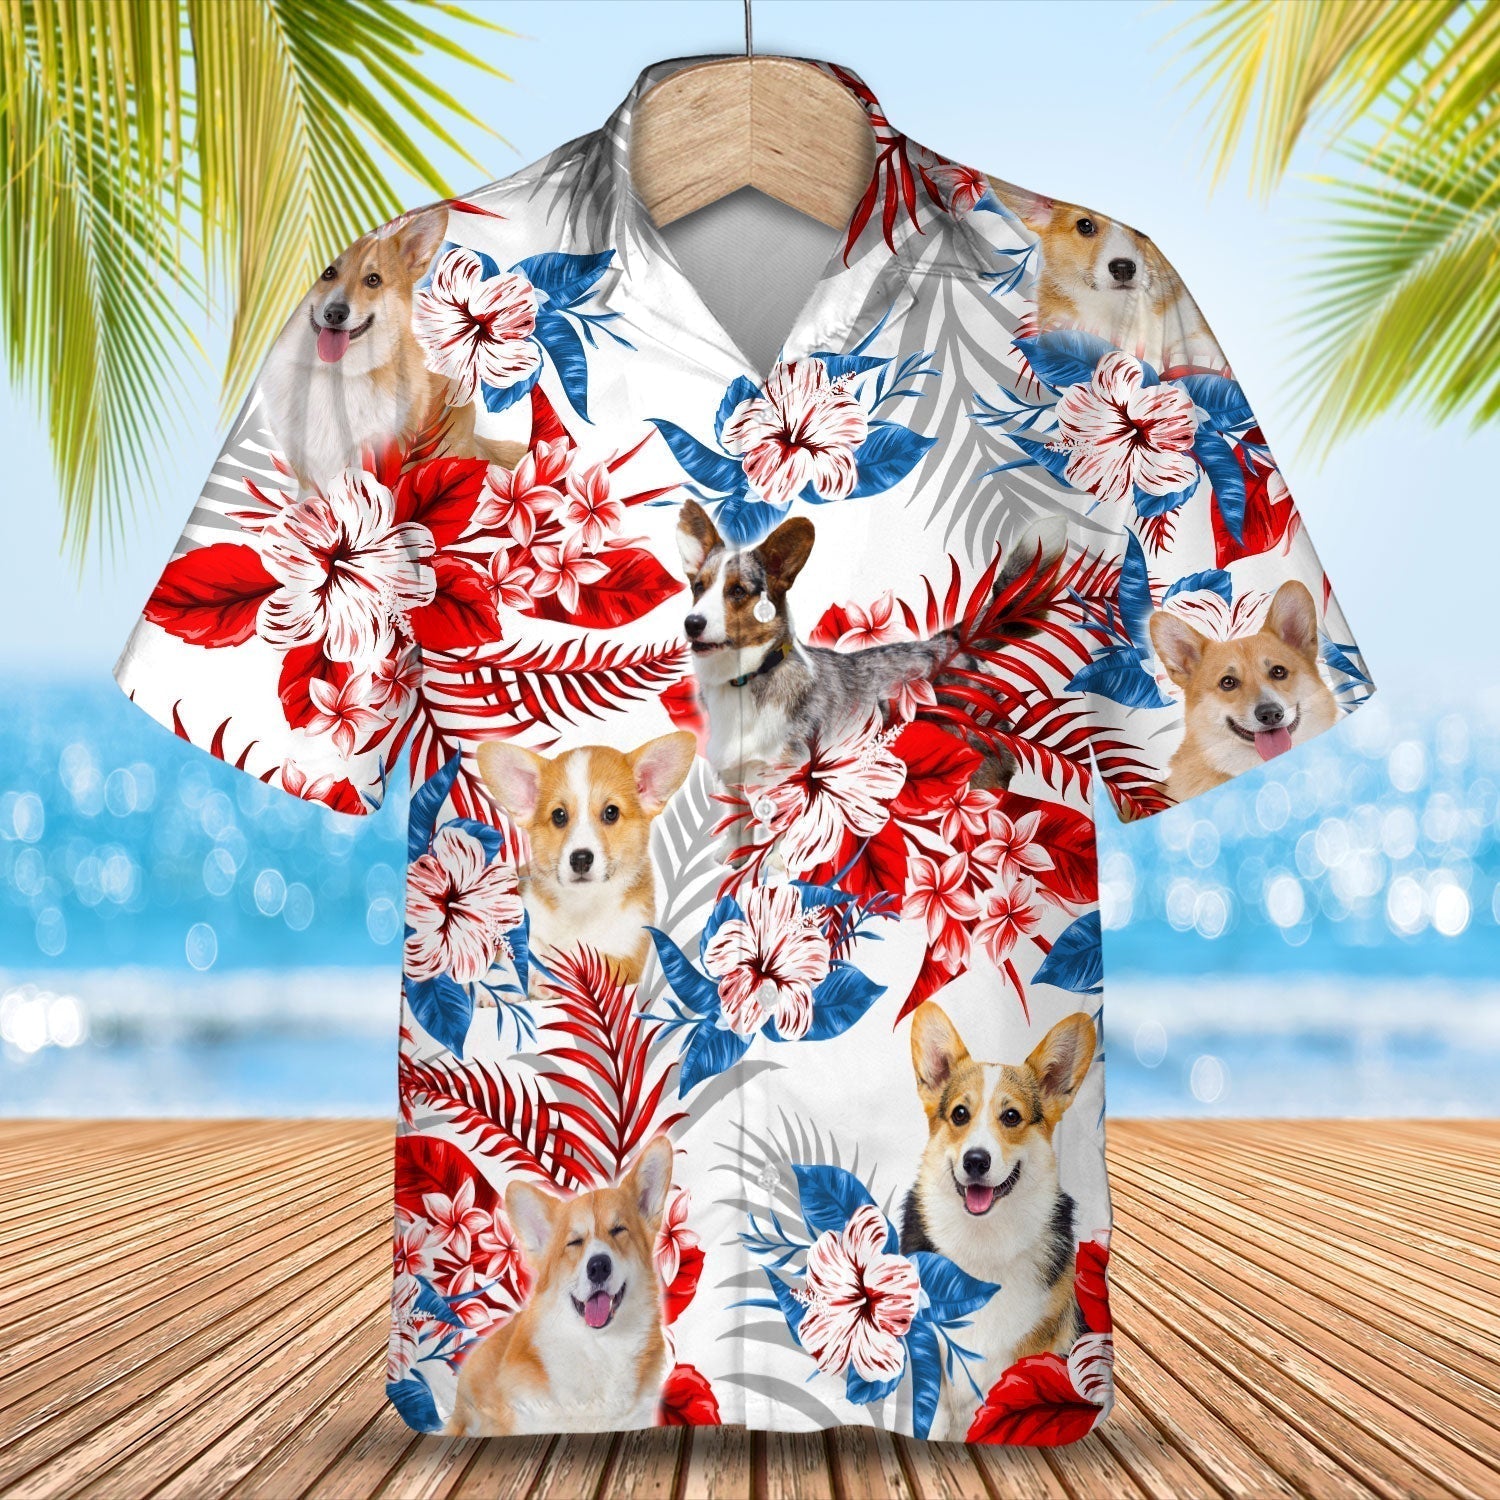 Welsh Corgi Hawaiian Shirt - Gift for Summer/ Summer aloha shirt/ Hawaiian shirt for Men and women